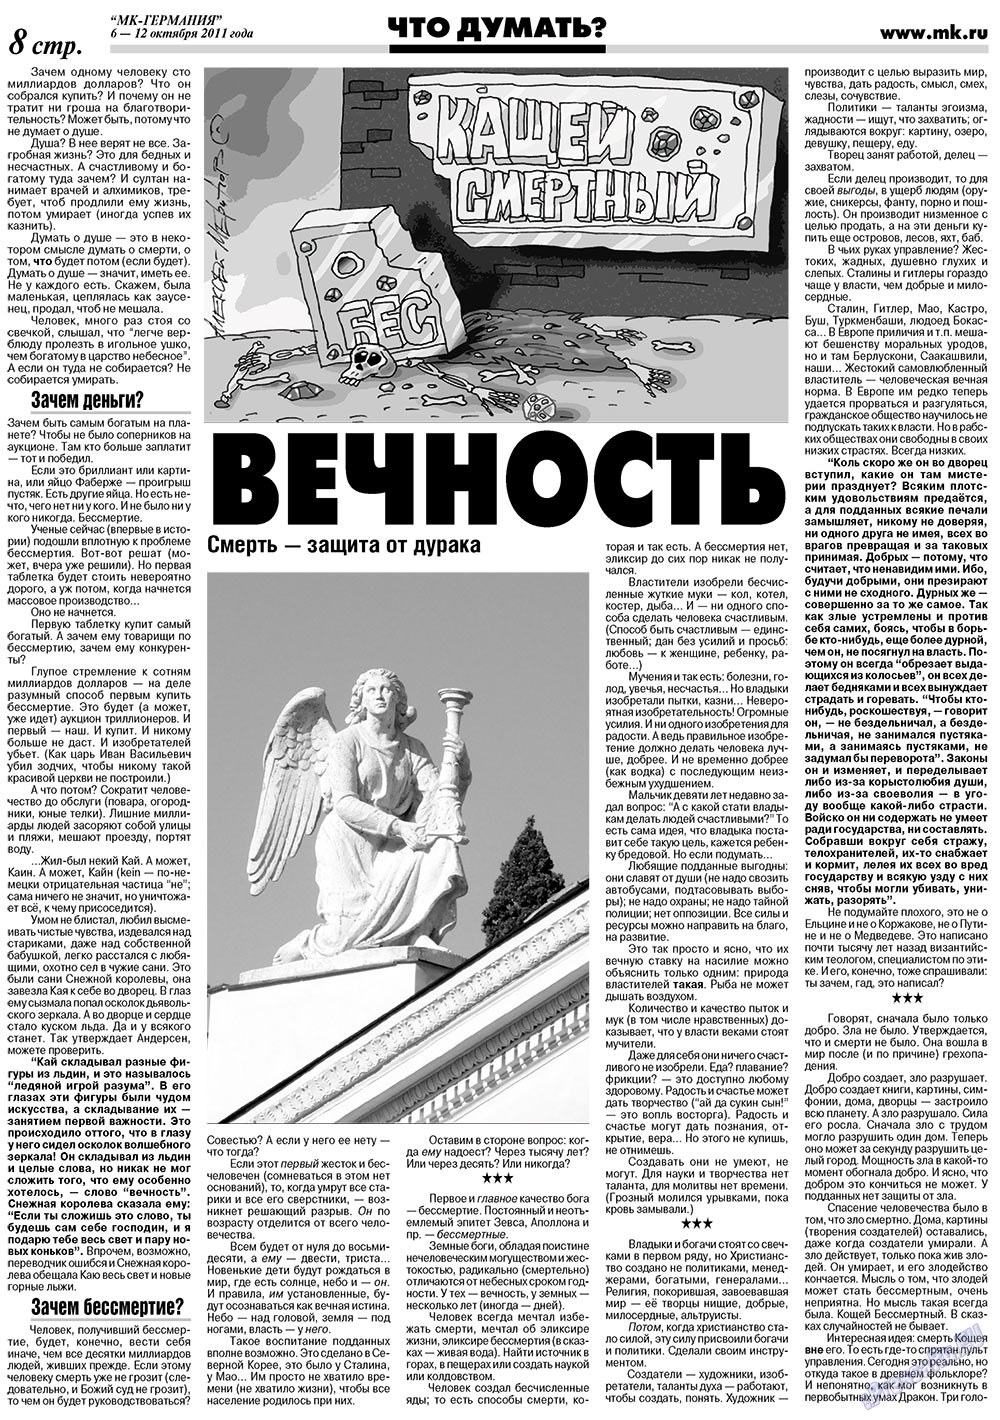 МК-Германия, газета. 2011 №40 стр.8